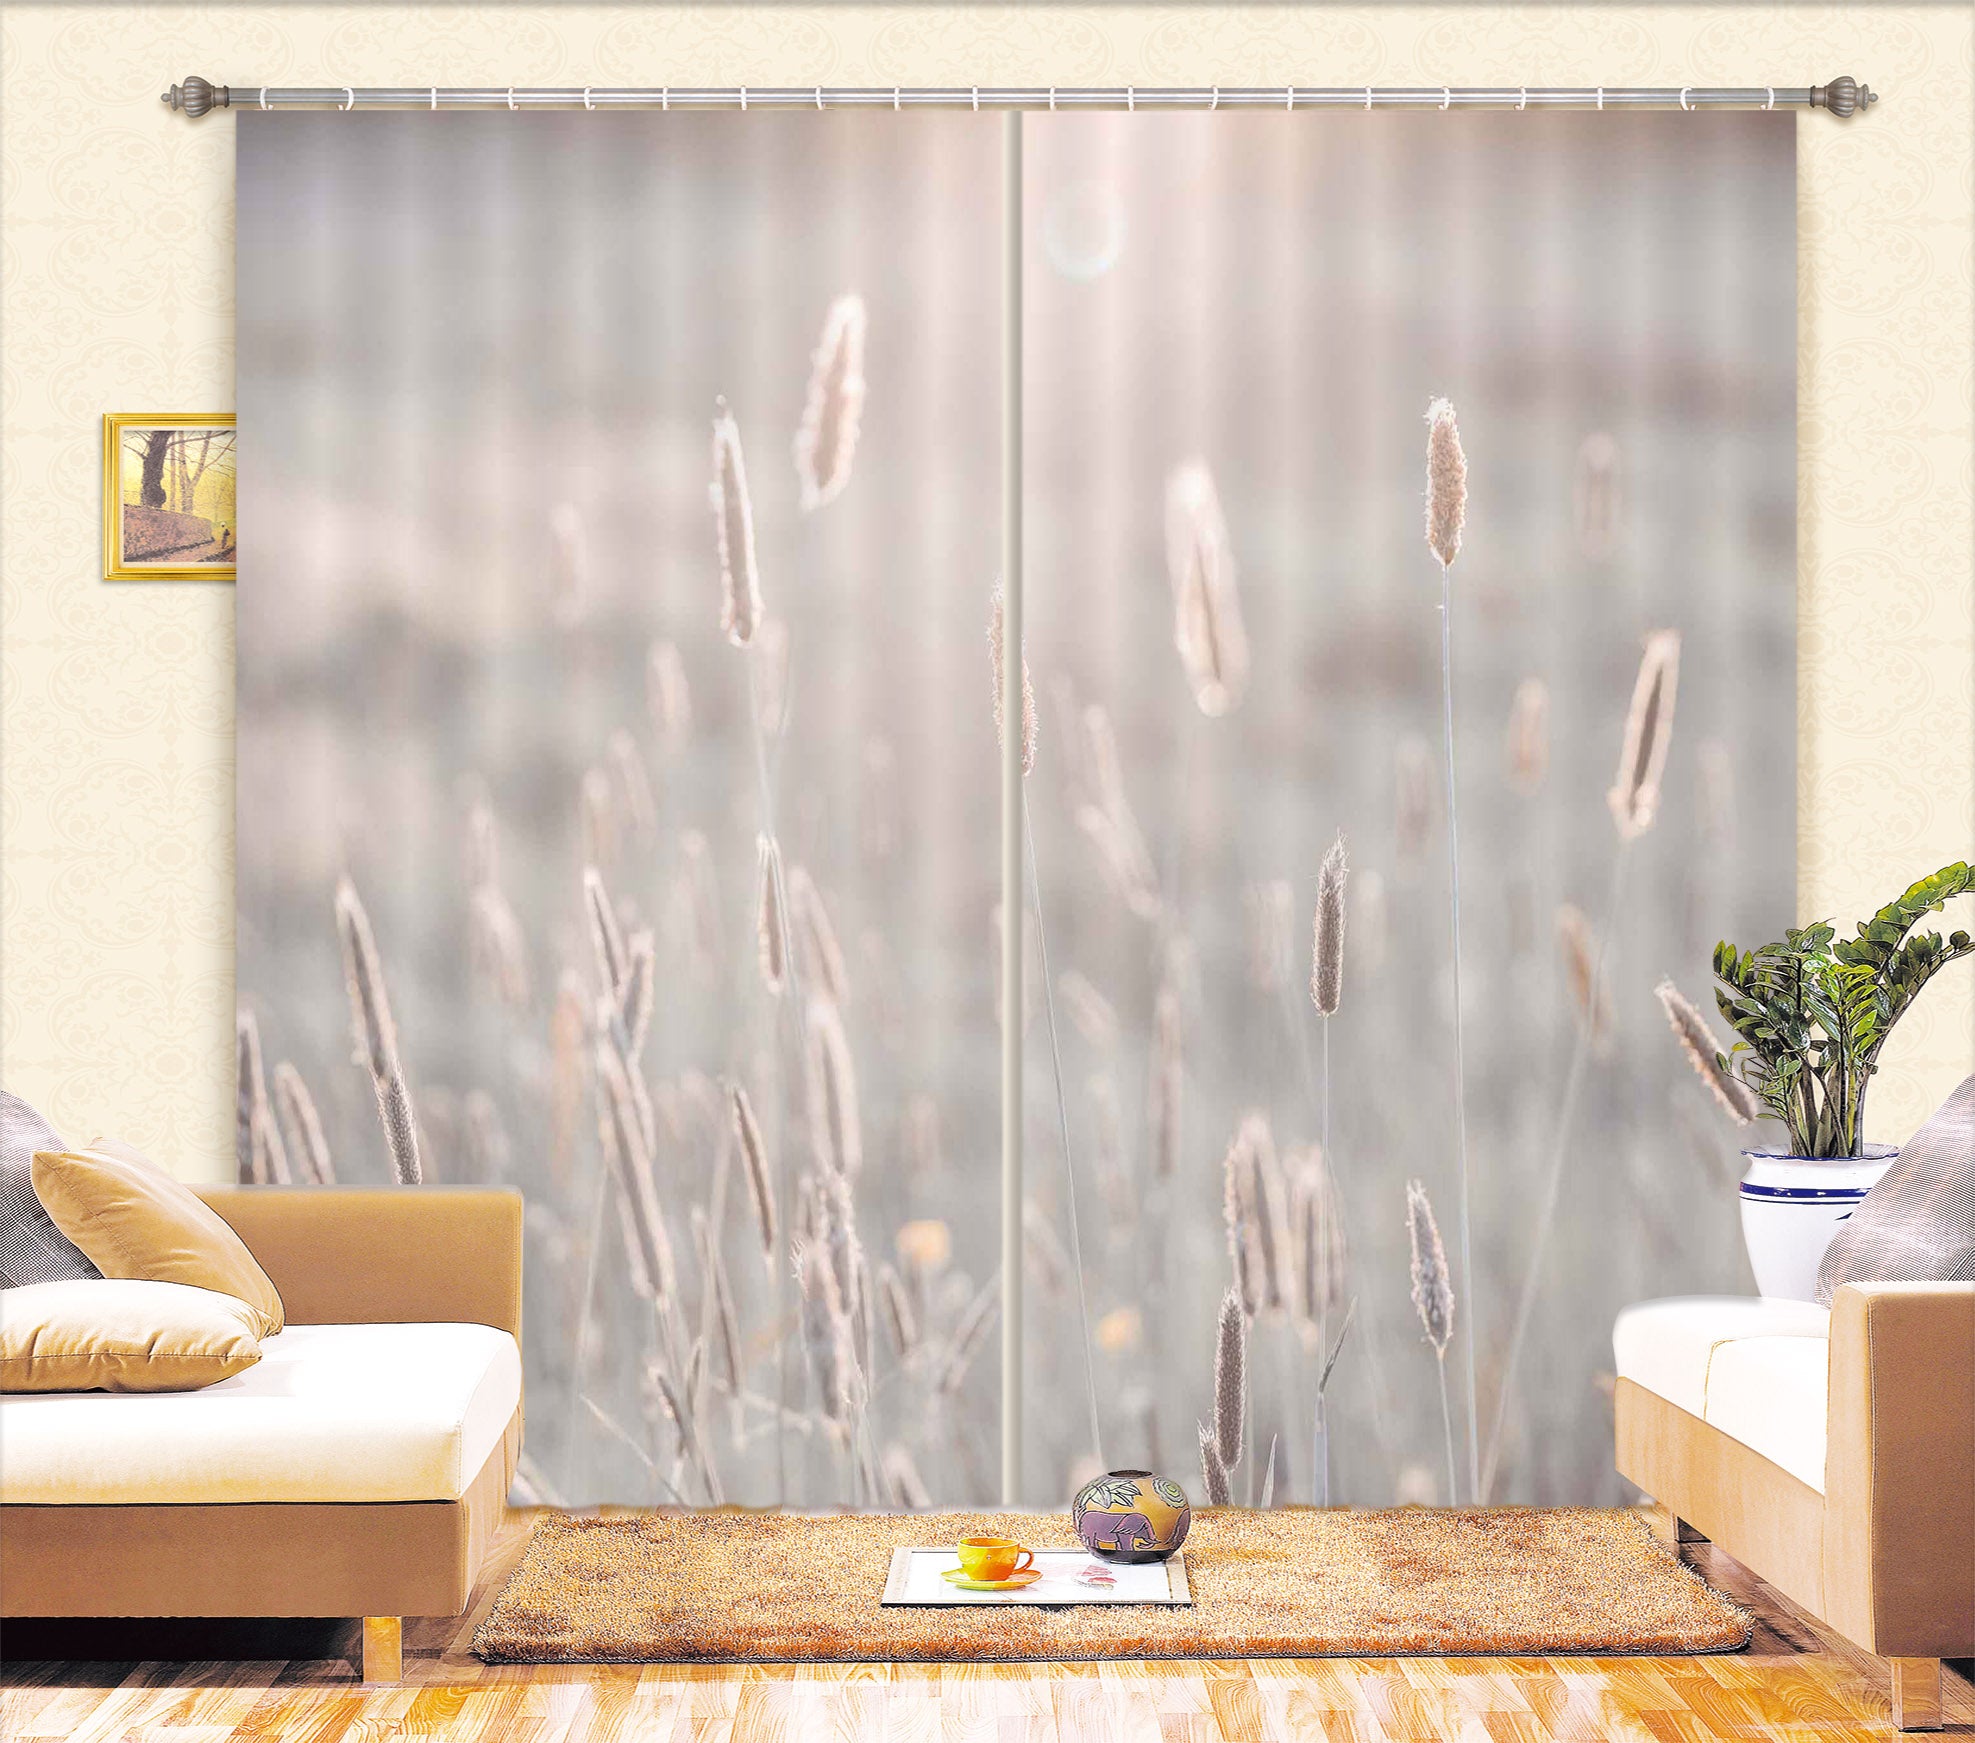 3D Morning Grass 6342 Assaf Frank Curtain Curtains Drapes